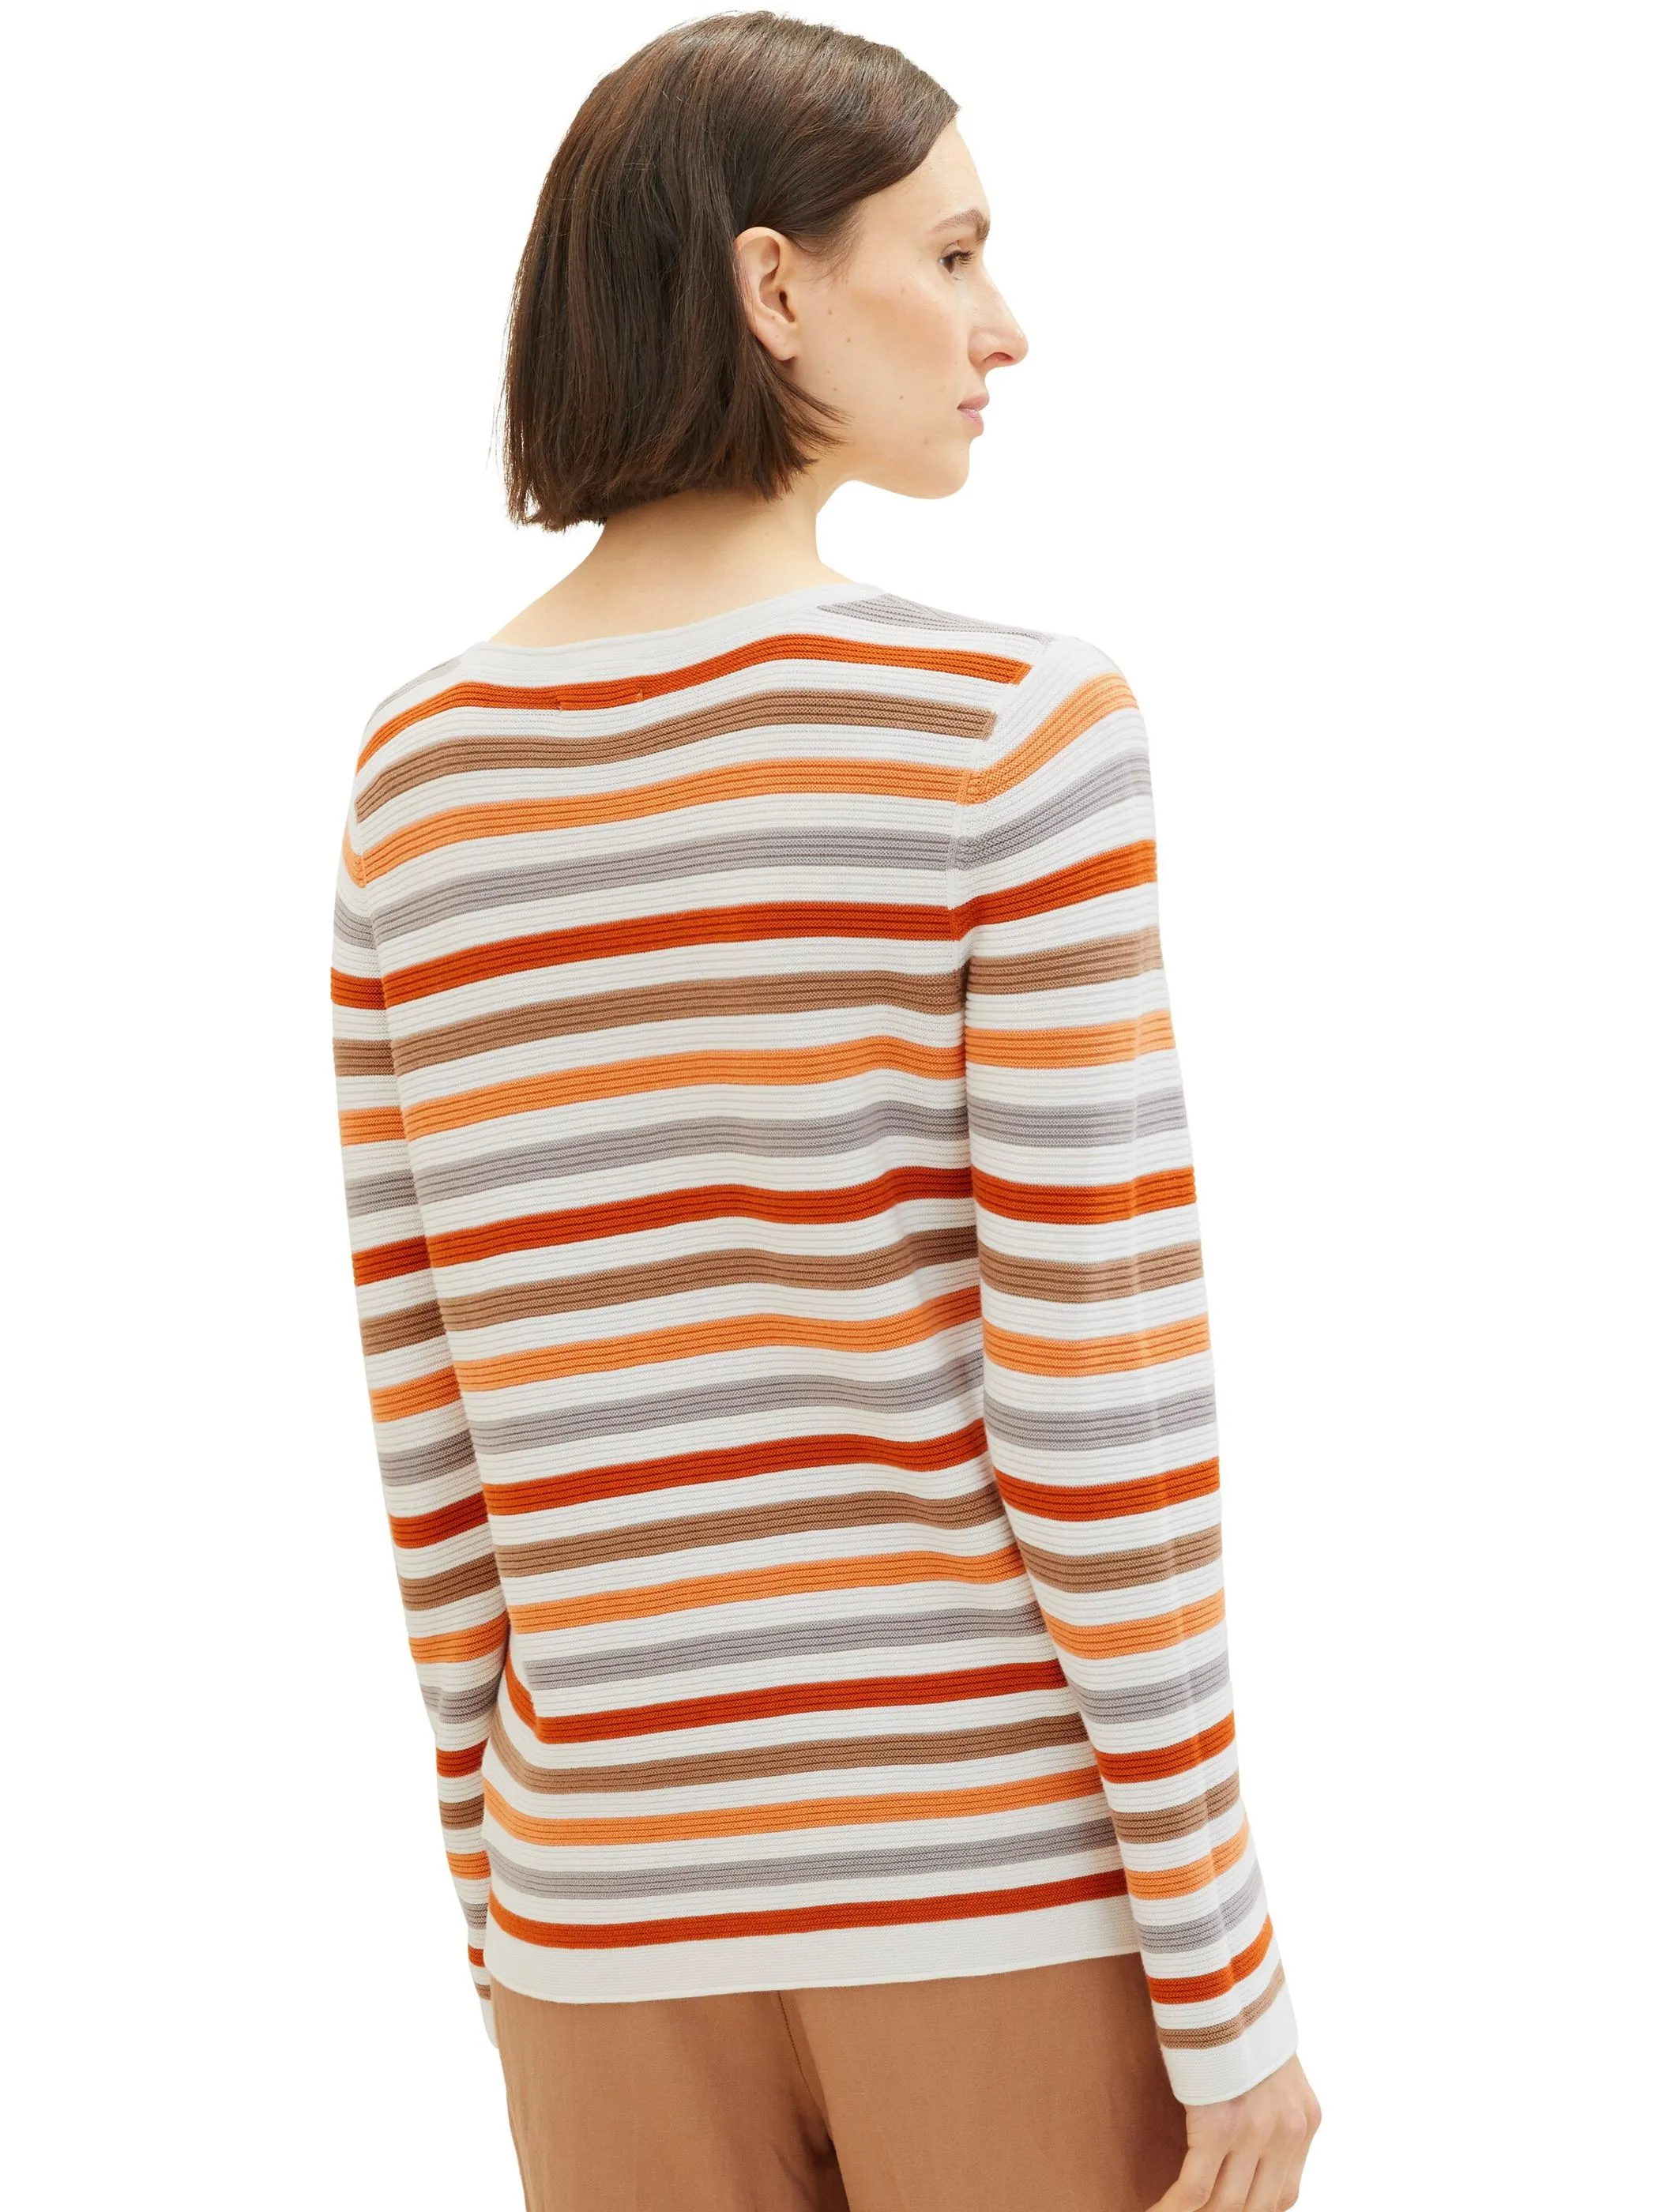 Tom Tailor 1016350 NOS sweater new ottoma Orange 827729 32441 2